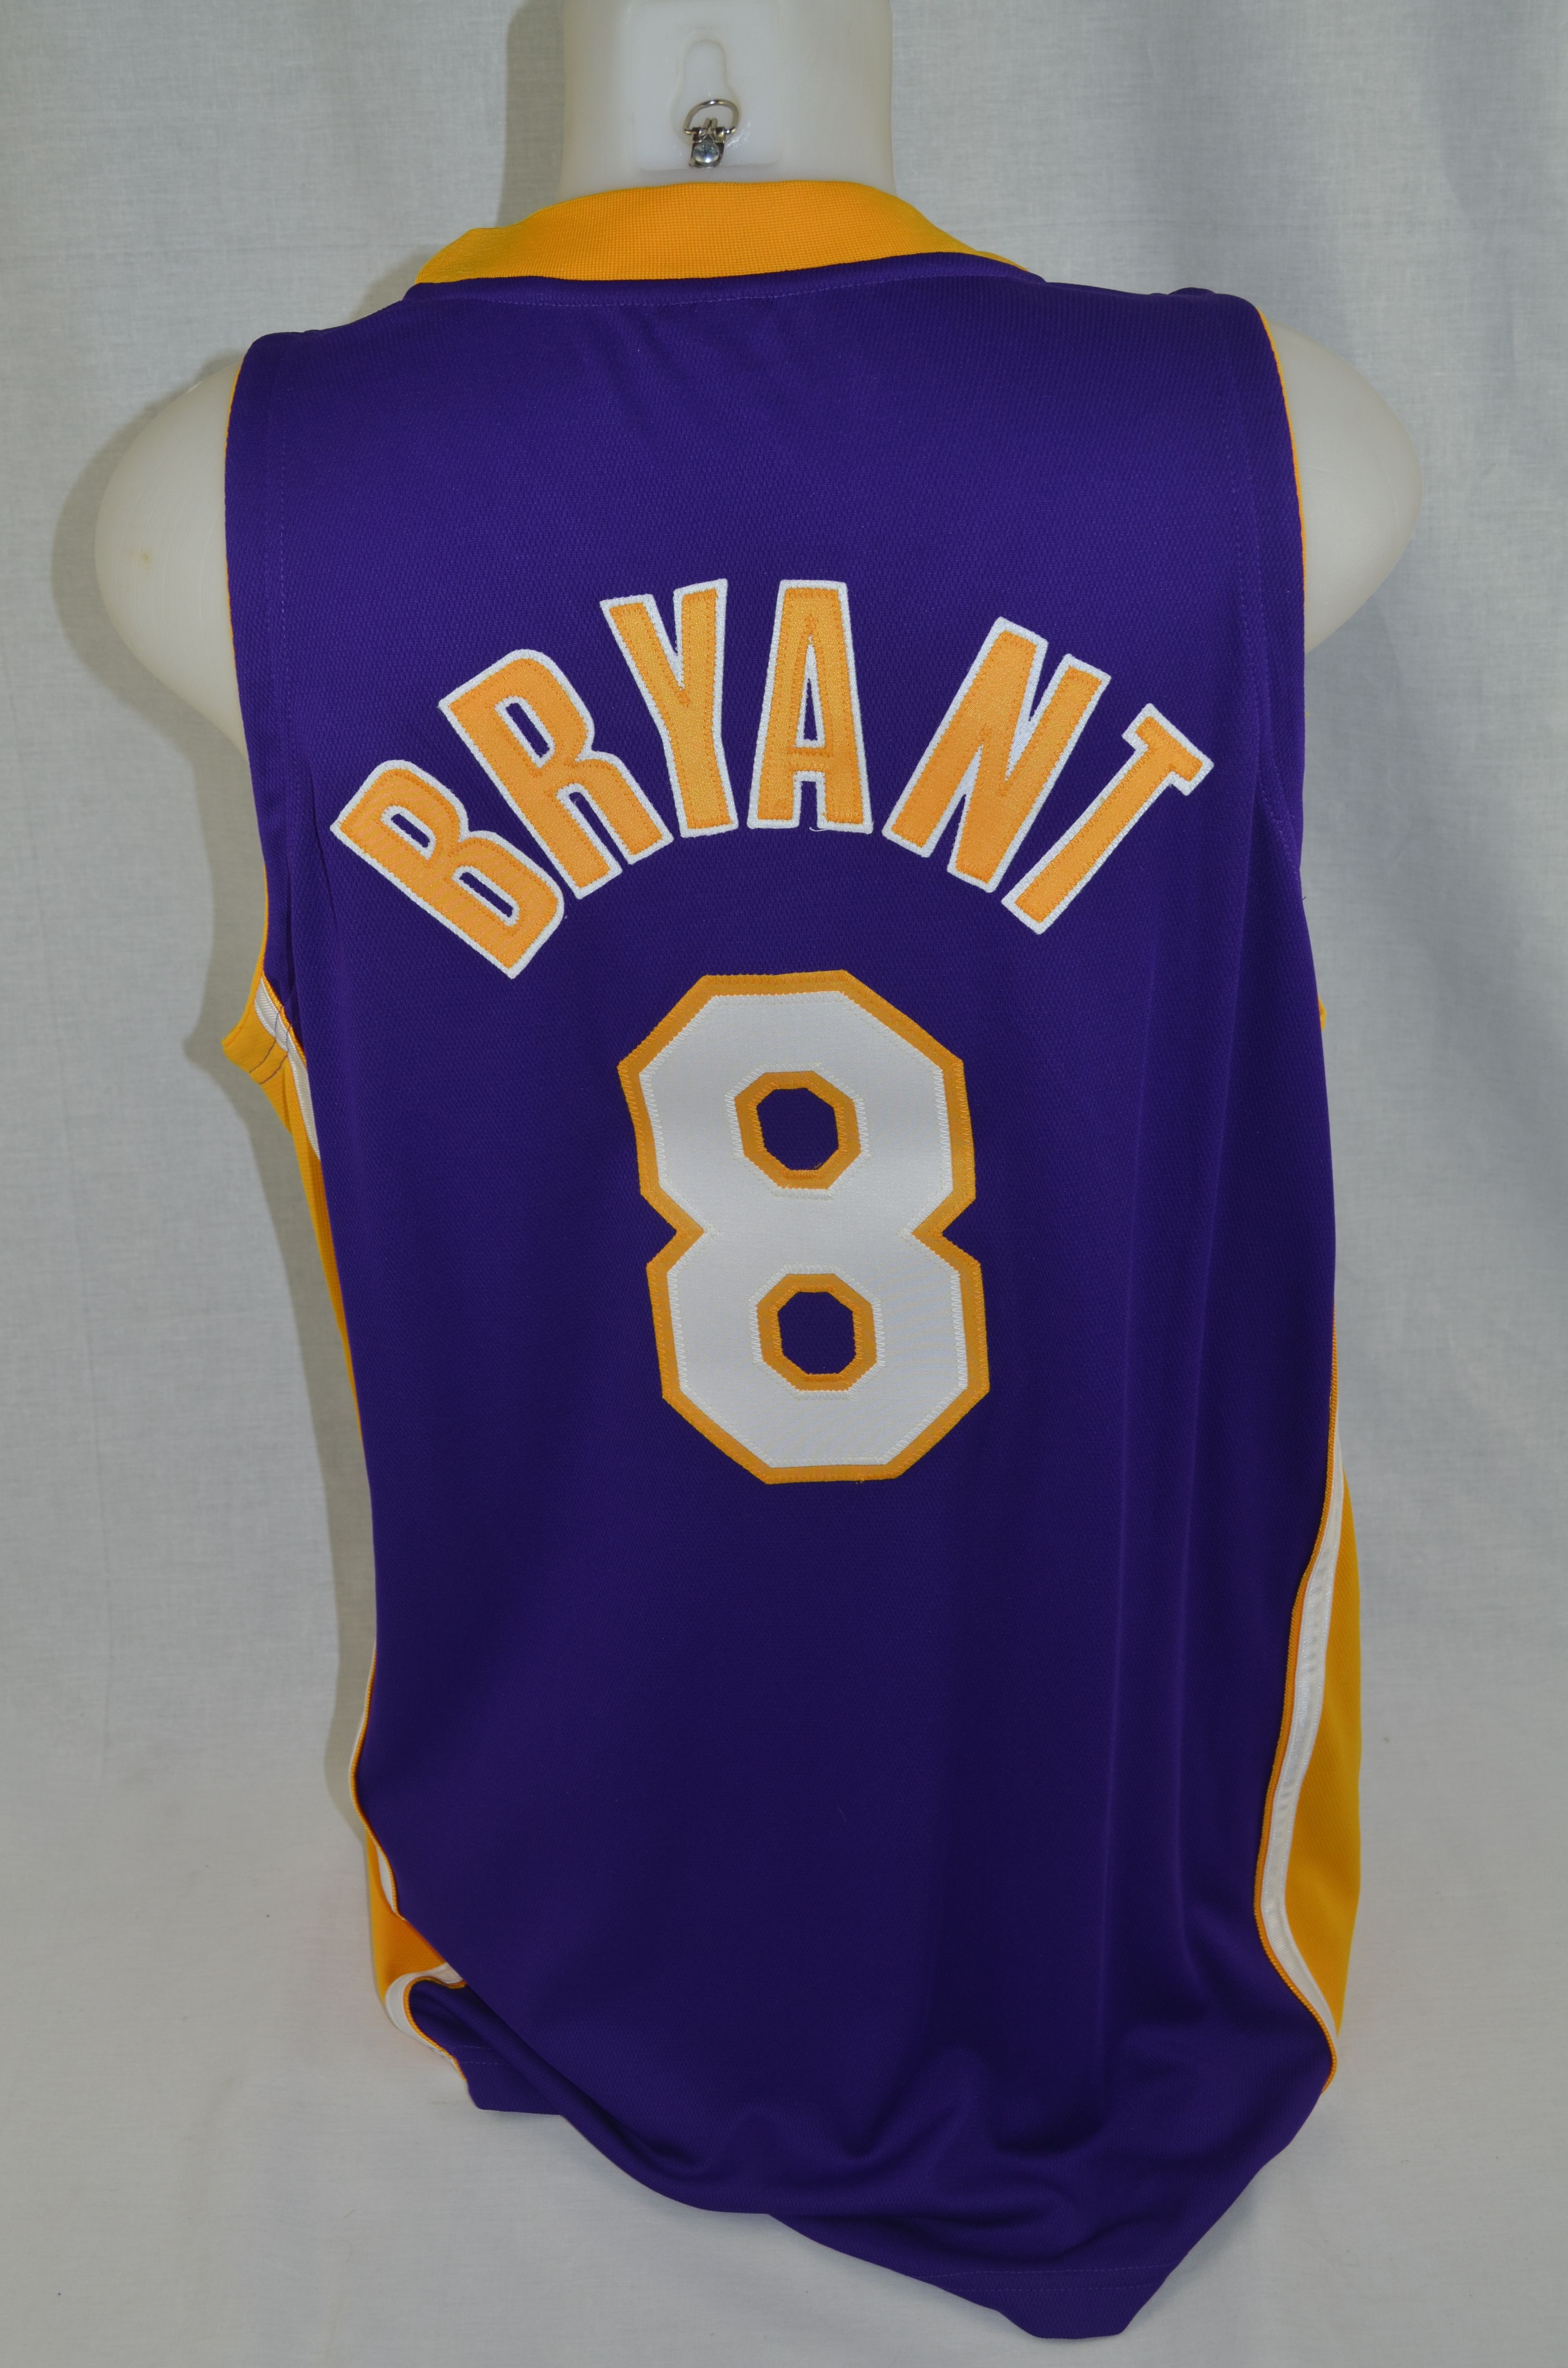 Kobe Bryant #8 Purple Jersey